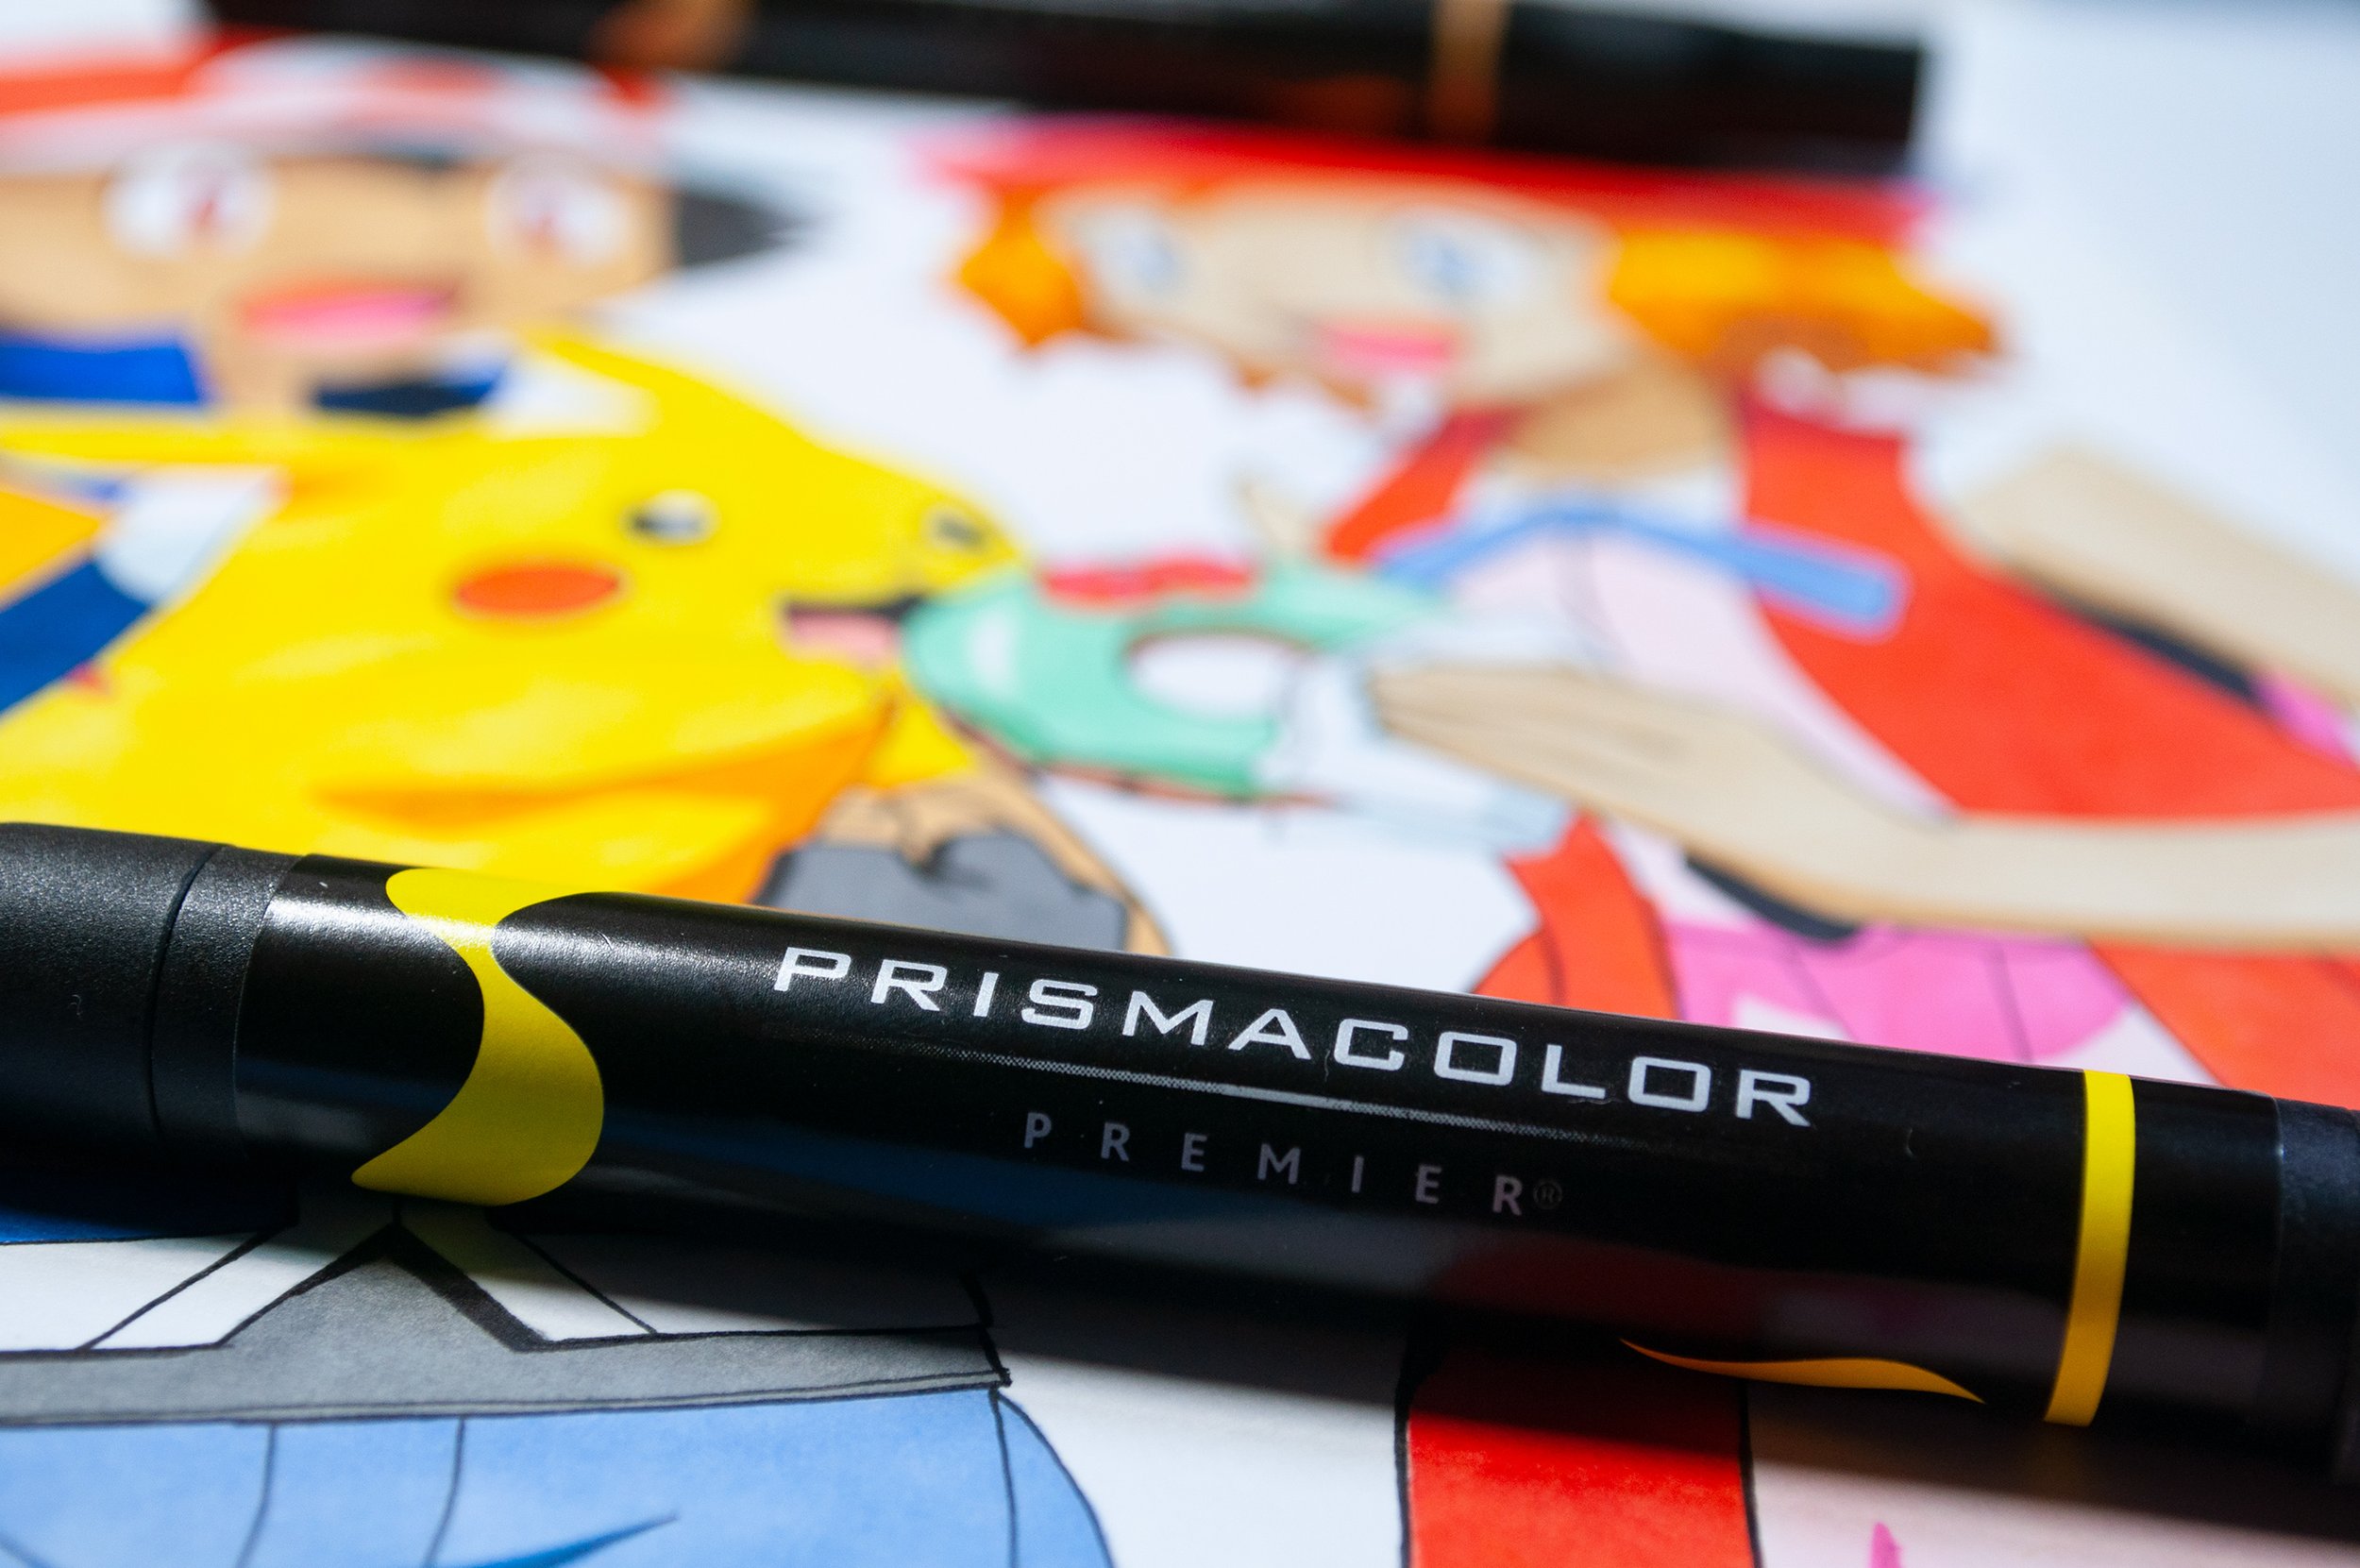 Prismacolor 72 Markers, Prismacolor Professional Art Marker Set,  Double-ended Chisel and Fine Tips 